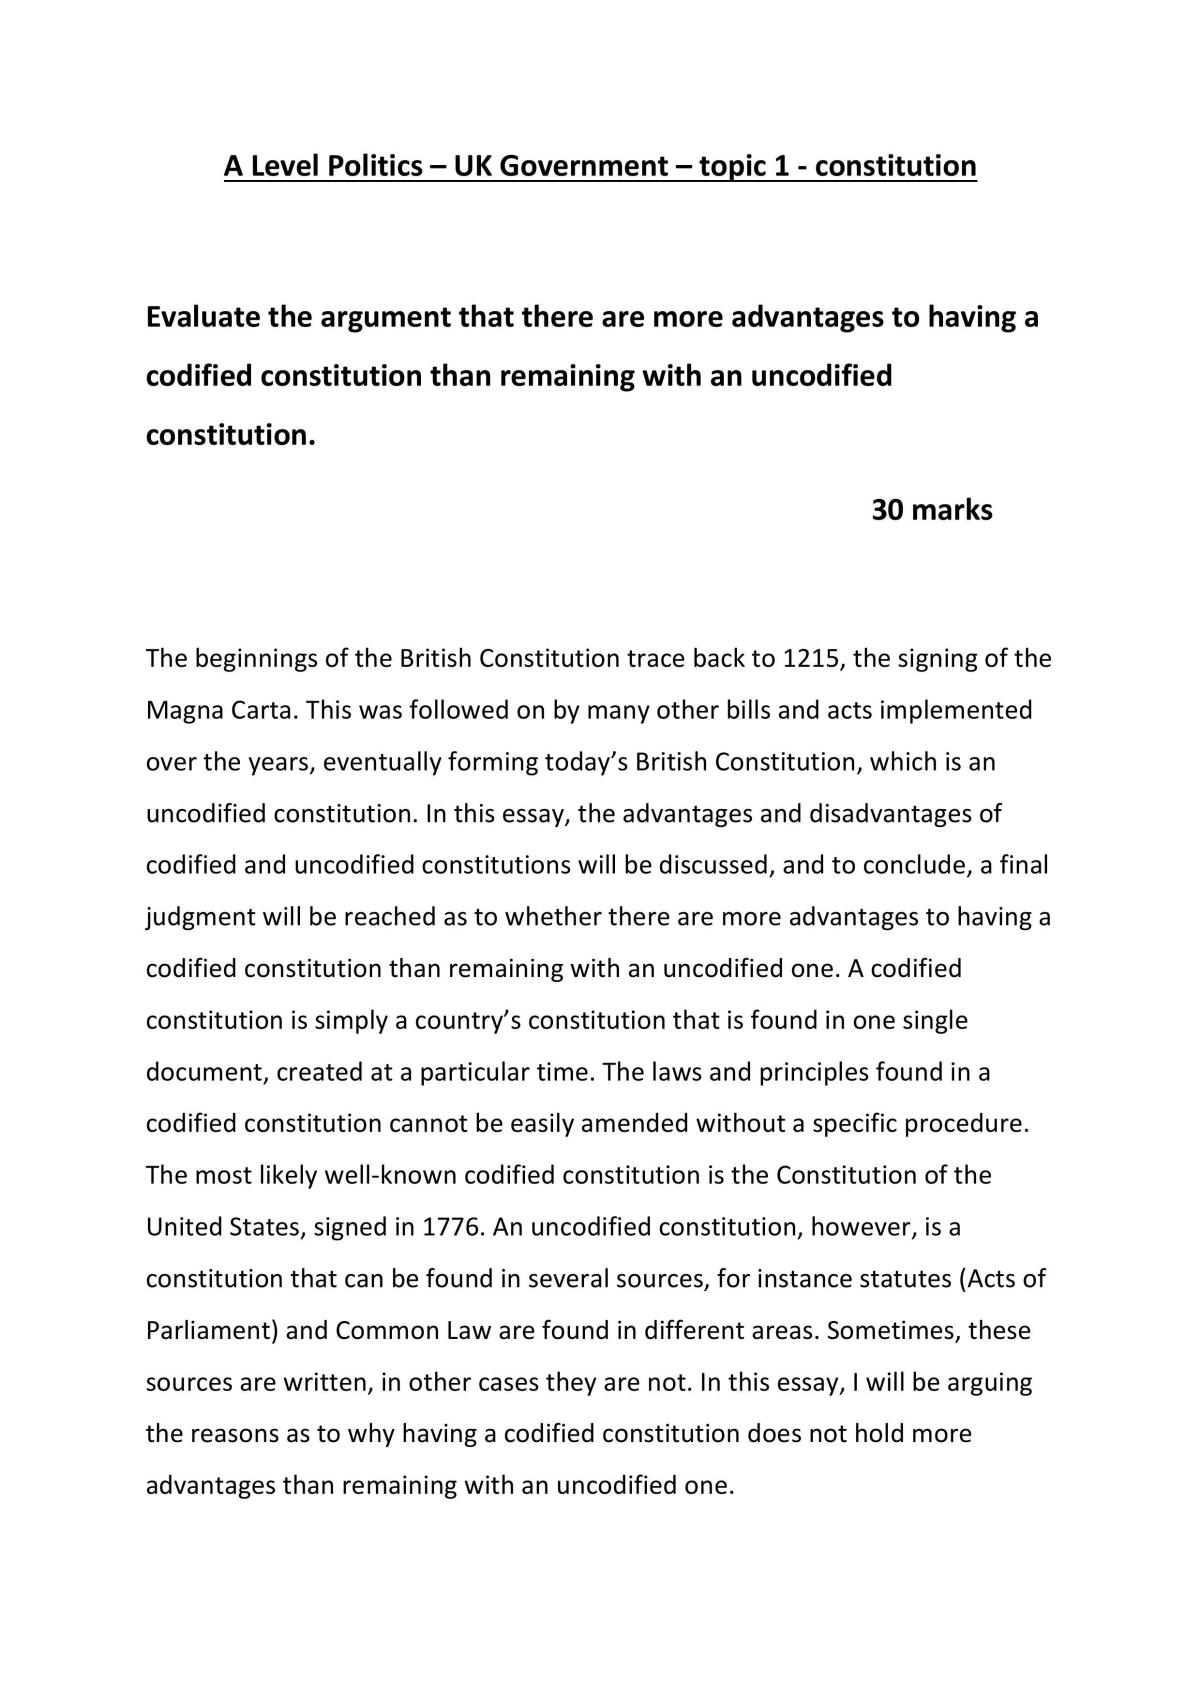 A Level Edexcel Politics UK Government constitution essay - Page 1